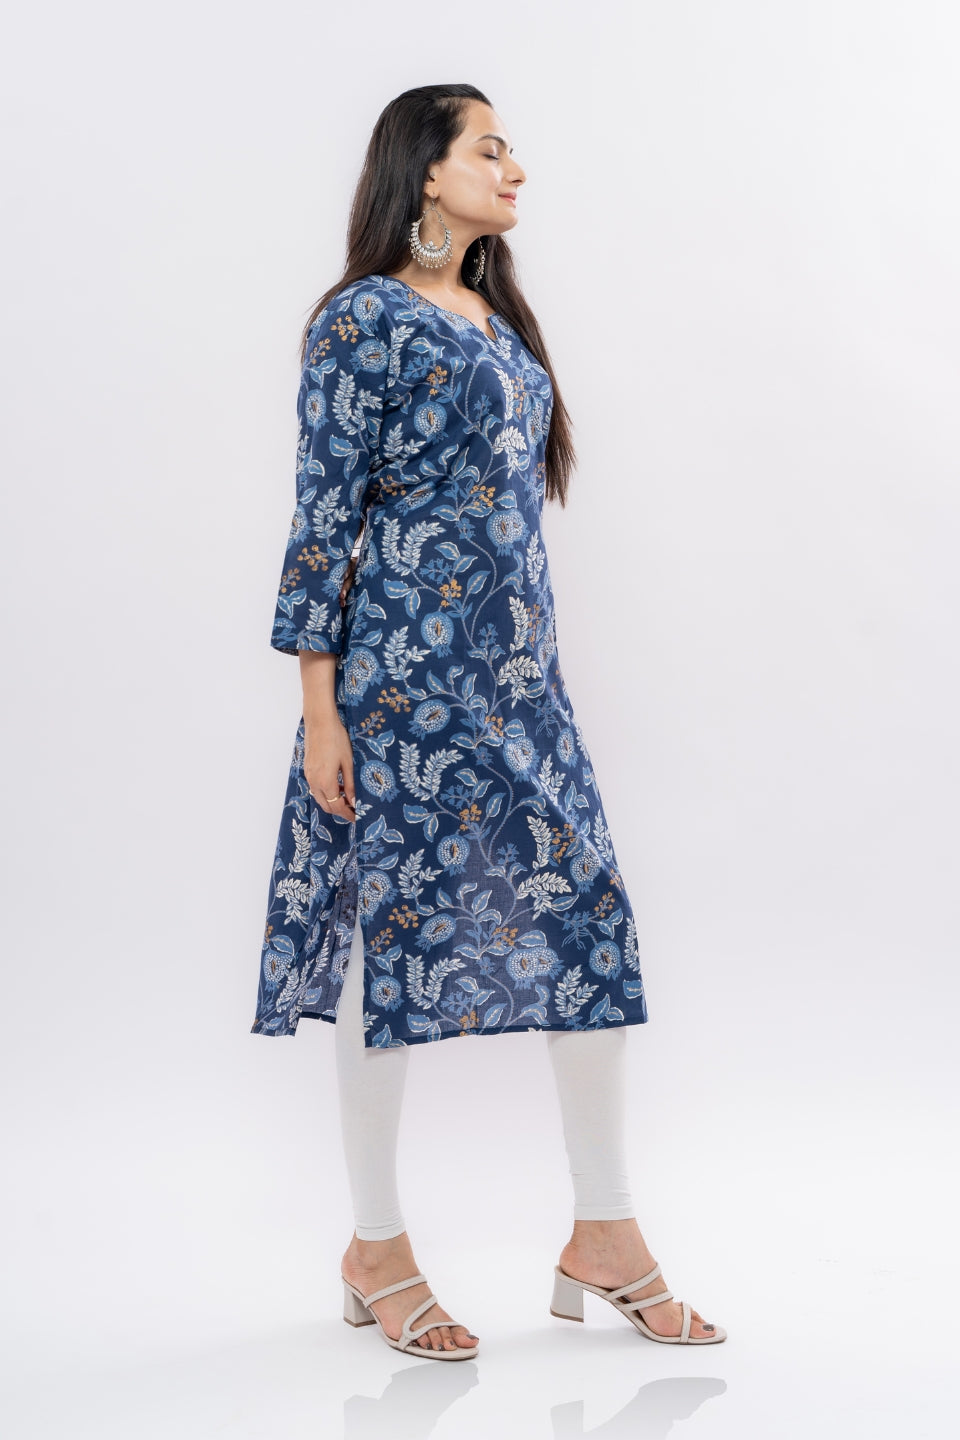 Ekisha women's cotton blue designer multicolor floral printed straight kurta kurti, side view